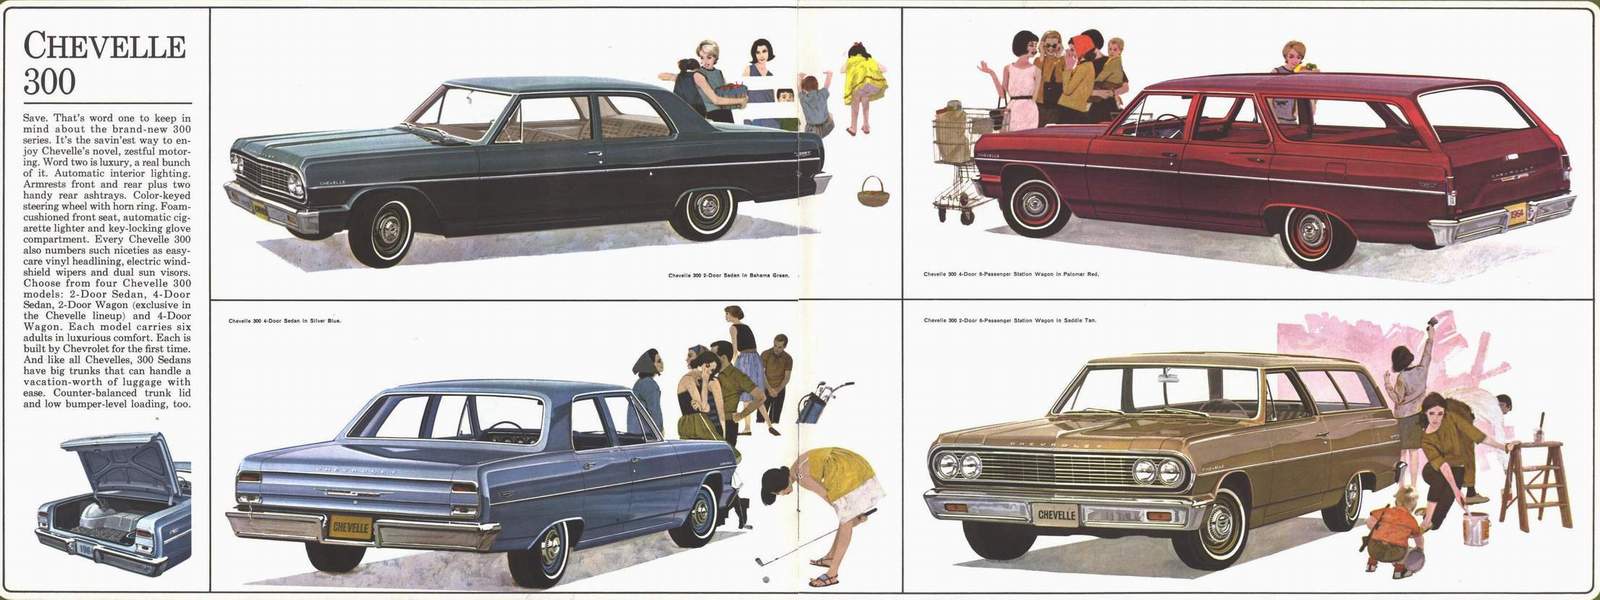 1964 Chev Chevelle Brochure Page 4